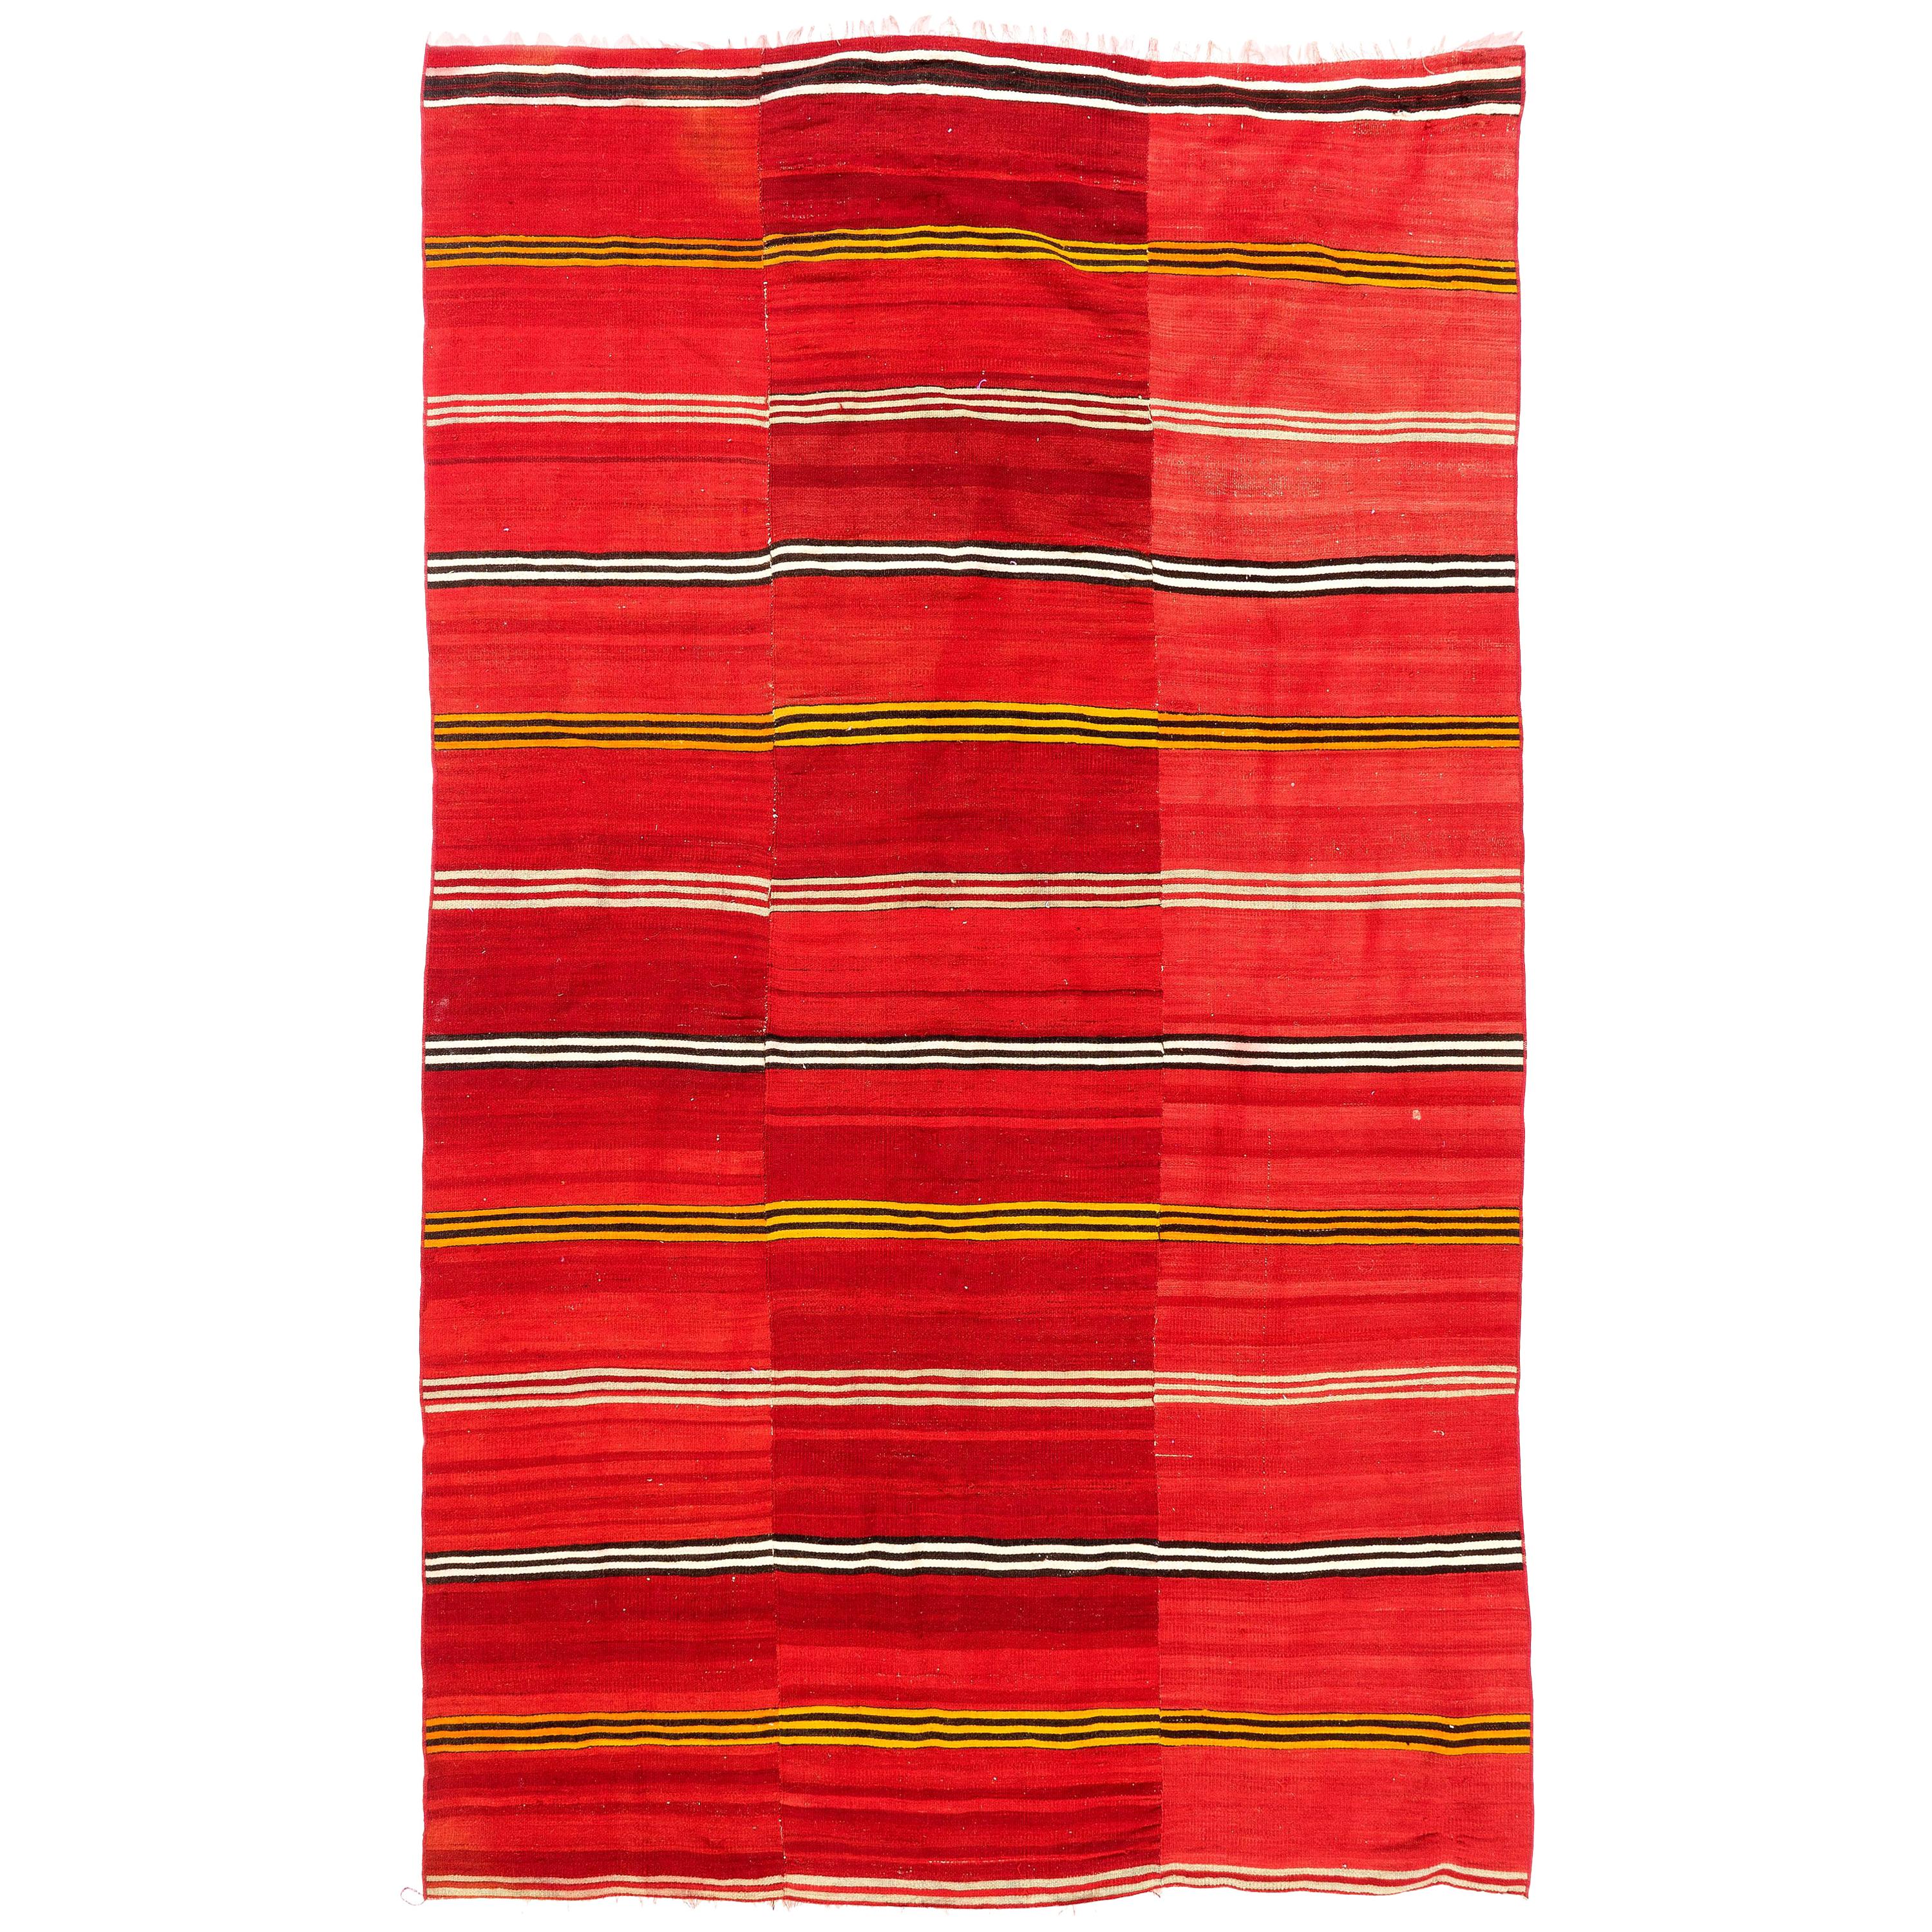 5x8.4 Ft Vintage Handmade Striped Nomadic Kilim Rug in Vivid Red Color, All Wool